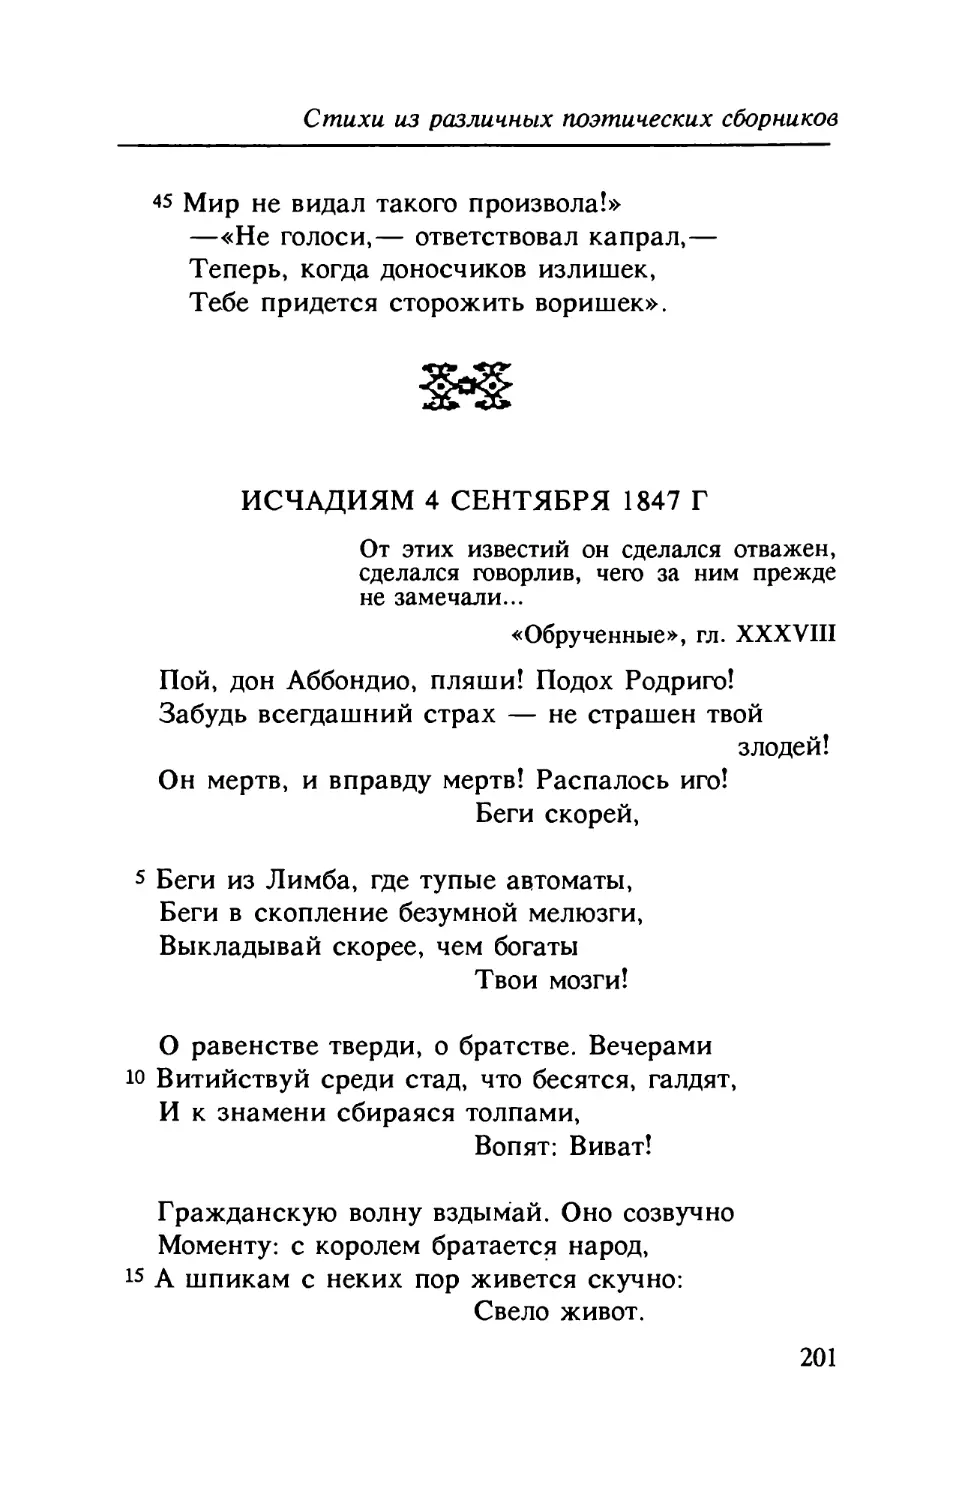 Исчадиям 4 сентября 1847 г. Перевод Е. Костюкович